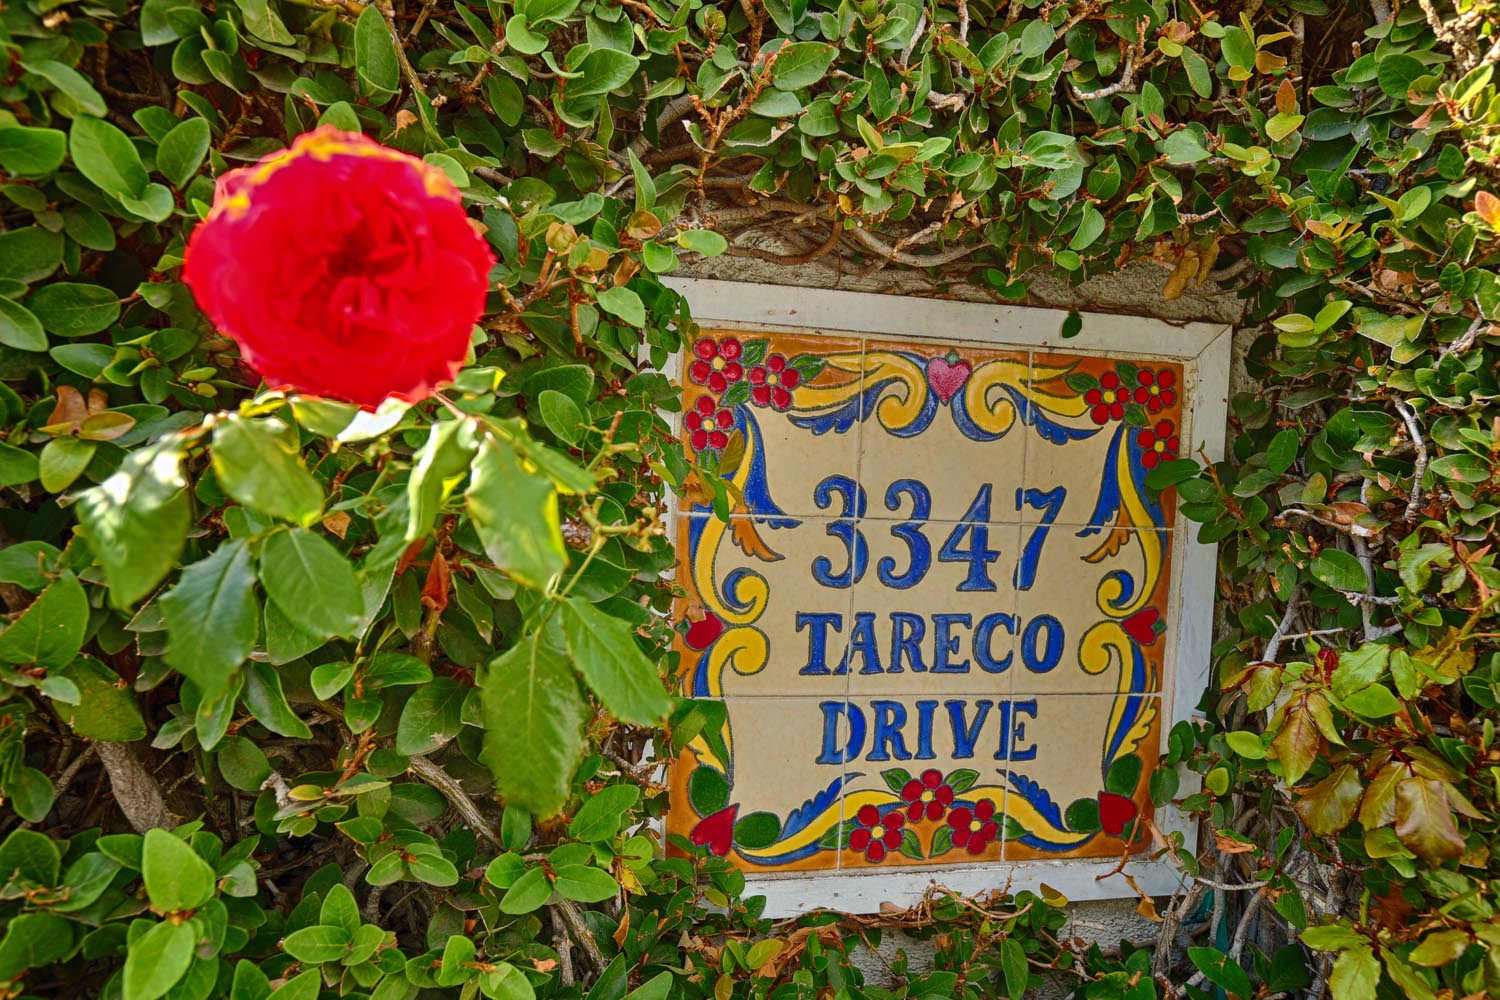 3347-Tareco-Drive-Los-Angeles-Address.jpg